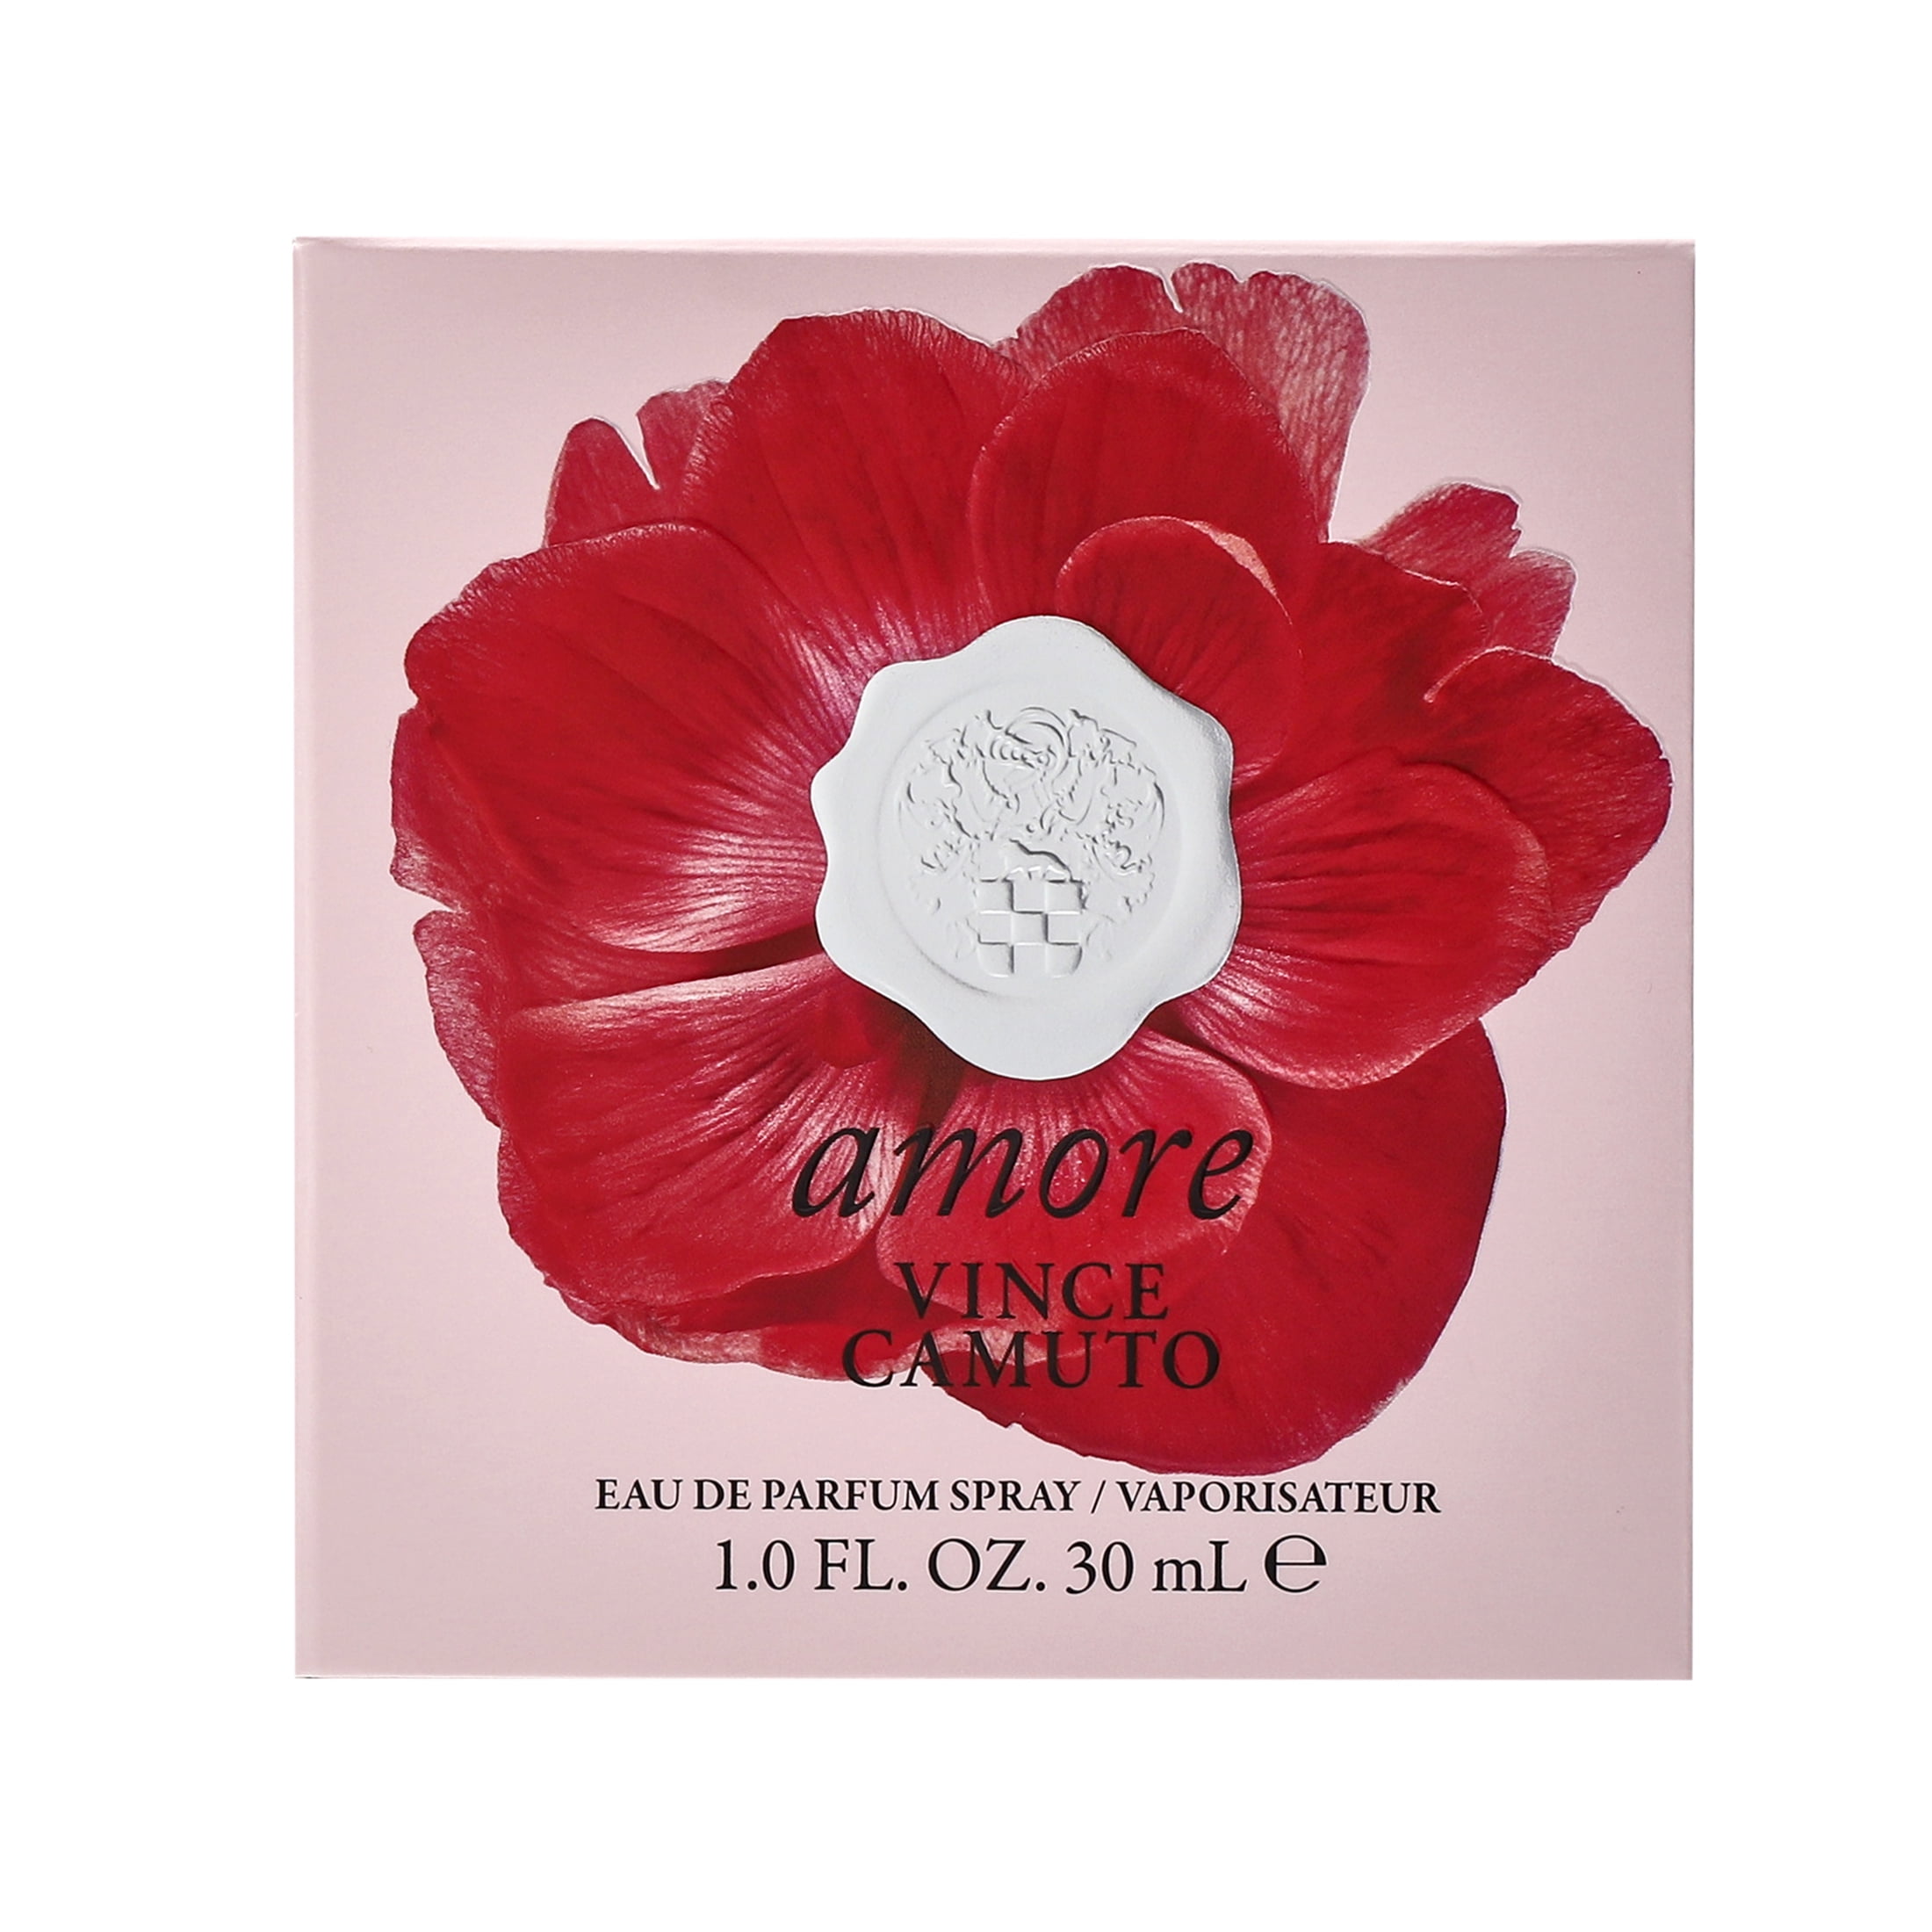 Vince Camuto Amore Eau de Parfum Spray, Perfume for Women, 1.0 oz